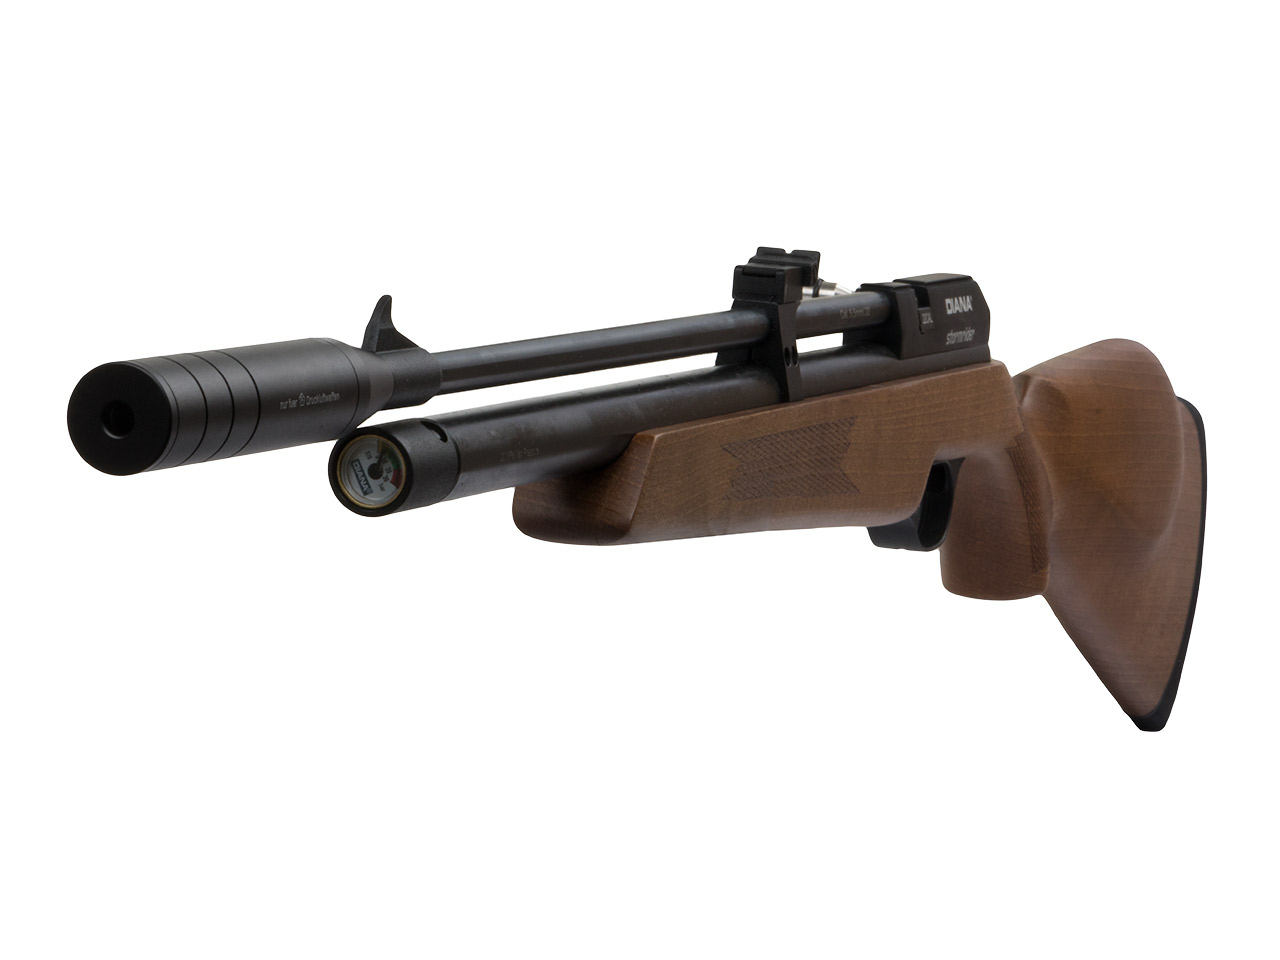 Pressluftgewehr Diana Stormrider Holzschaft mit Regulator 7 Schuss Magazin Schalldämpfer Kaliber 5,5 mm (P18)